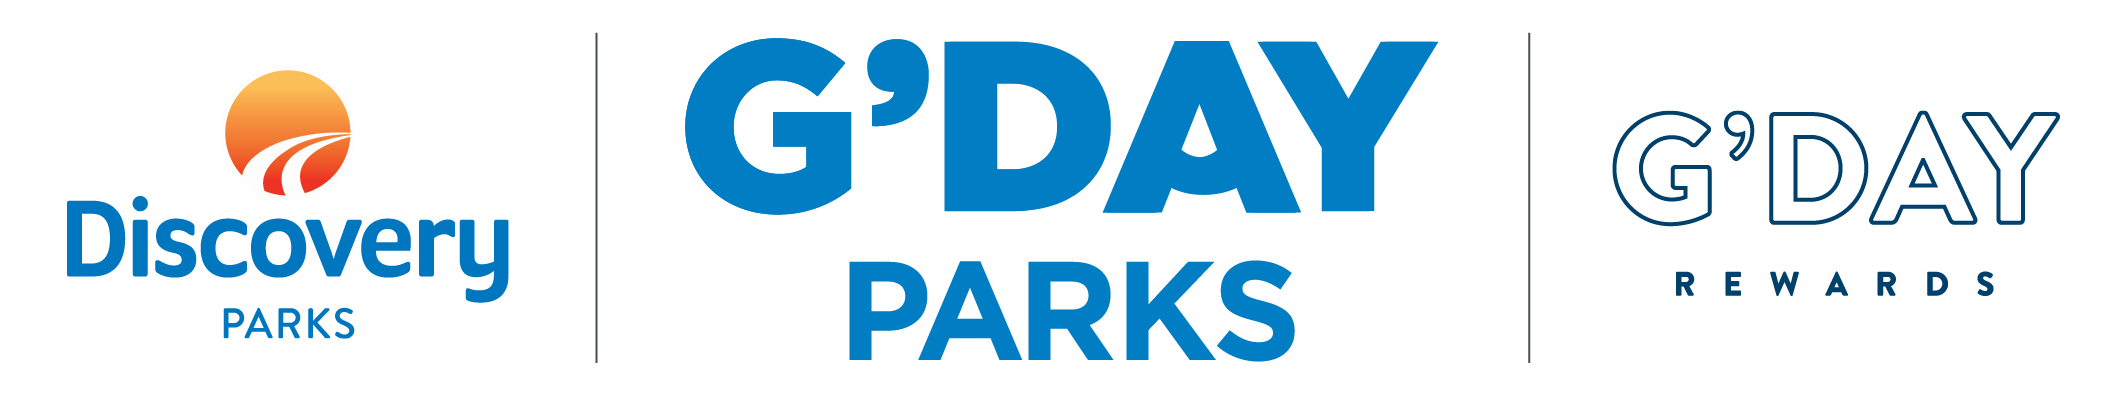 g'day parks tri logo lockup